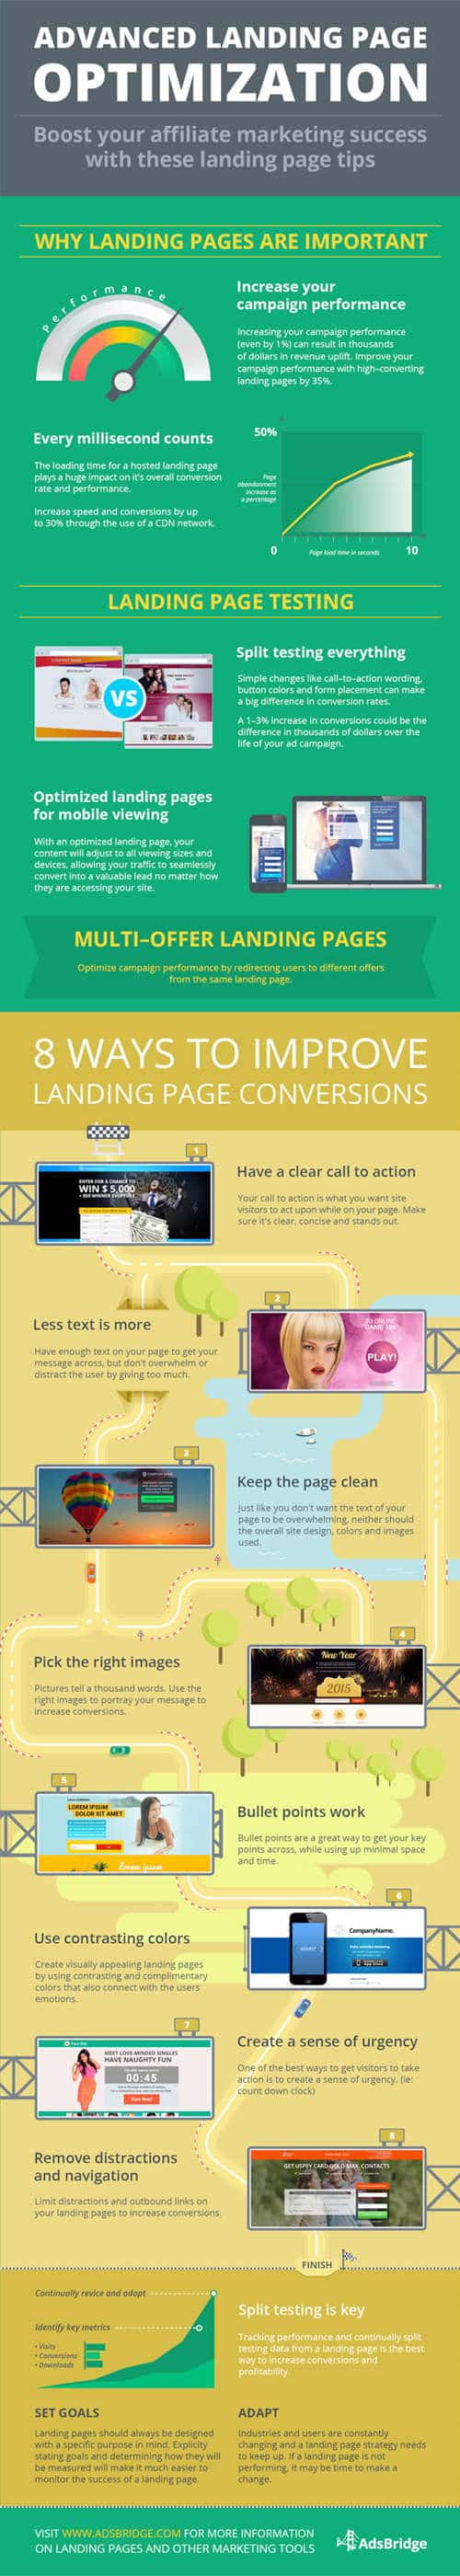 16 pasos para optimizar correctamente una landing page infografia